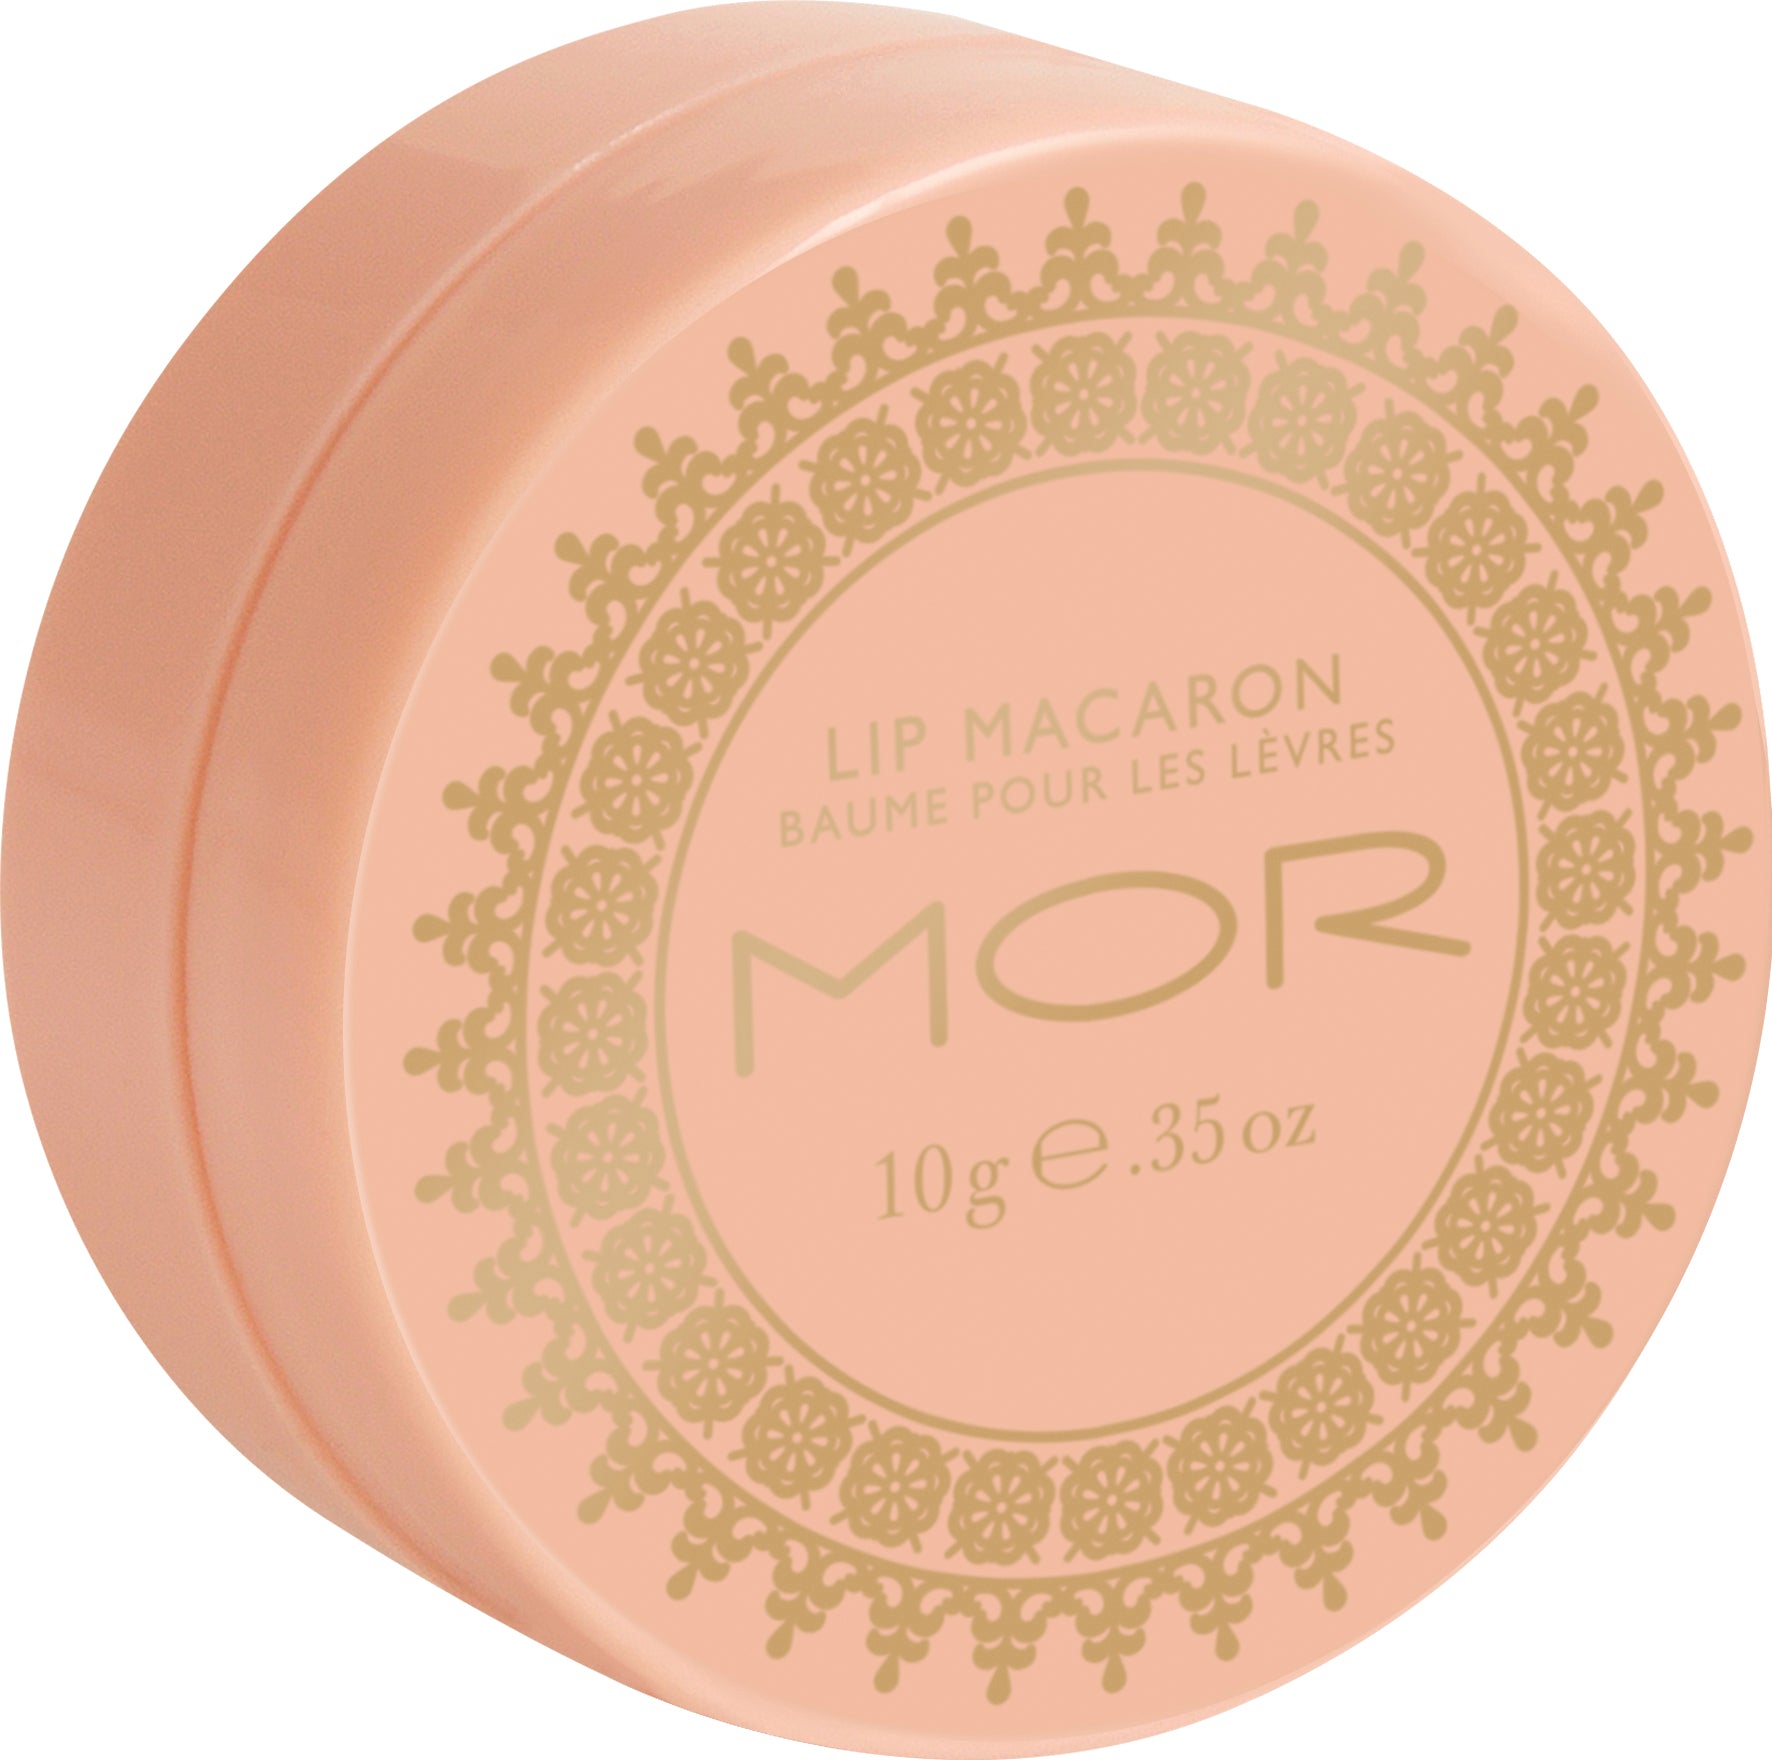 Lip Macaron, Peach Nectar, MOR-VONMEL Luxe Gifts